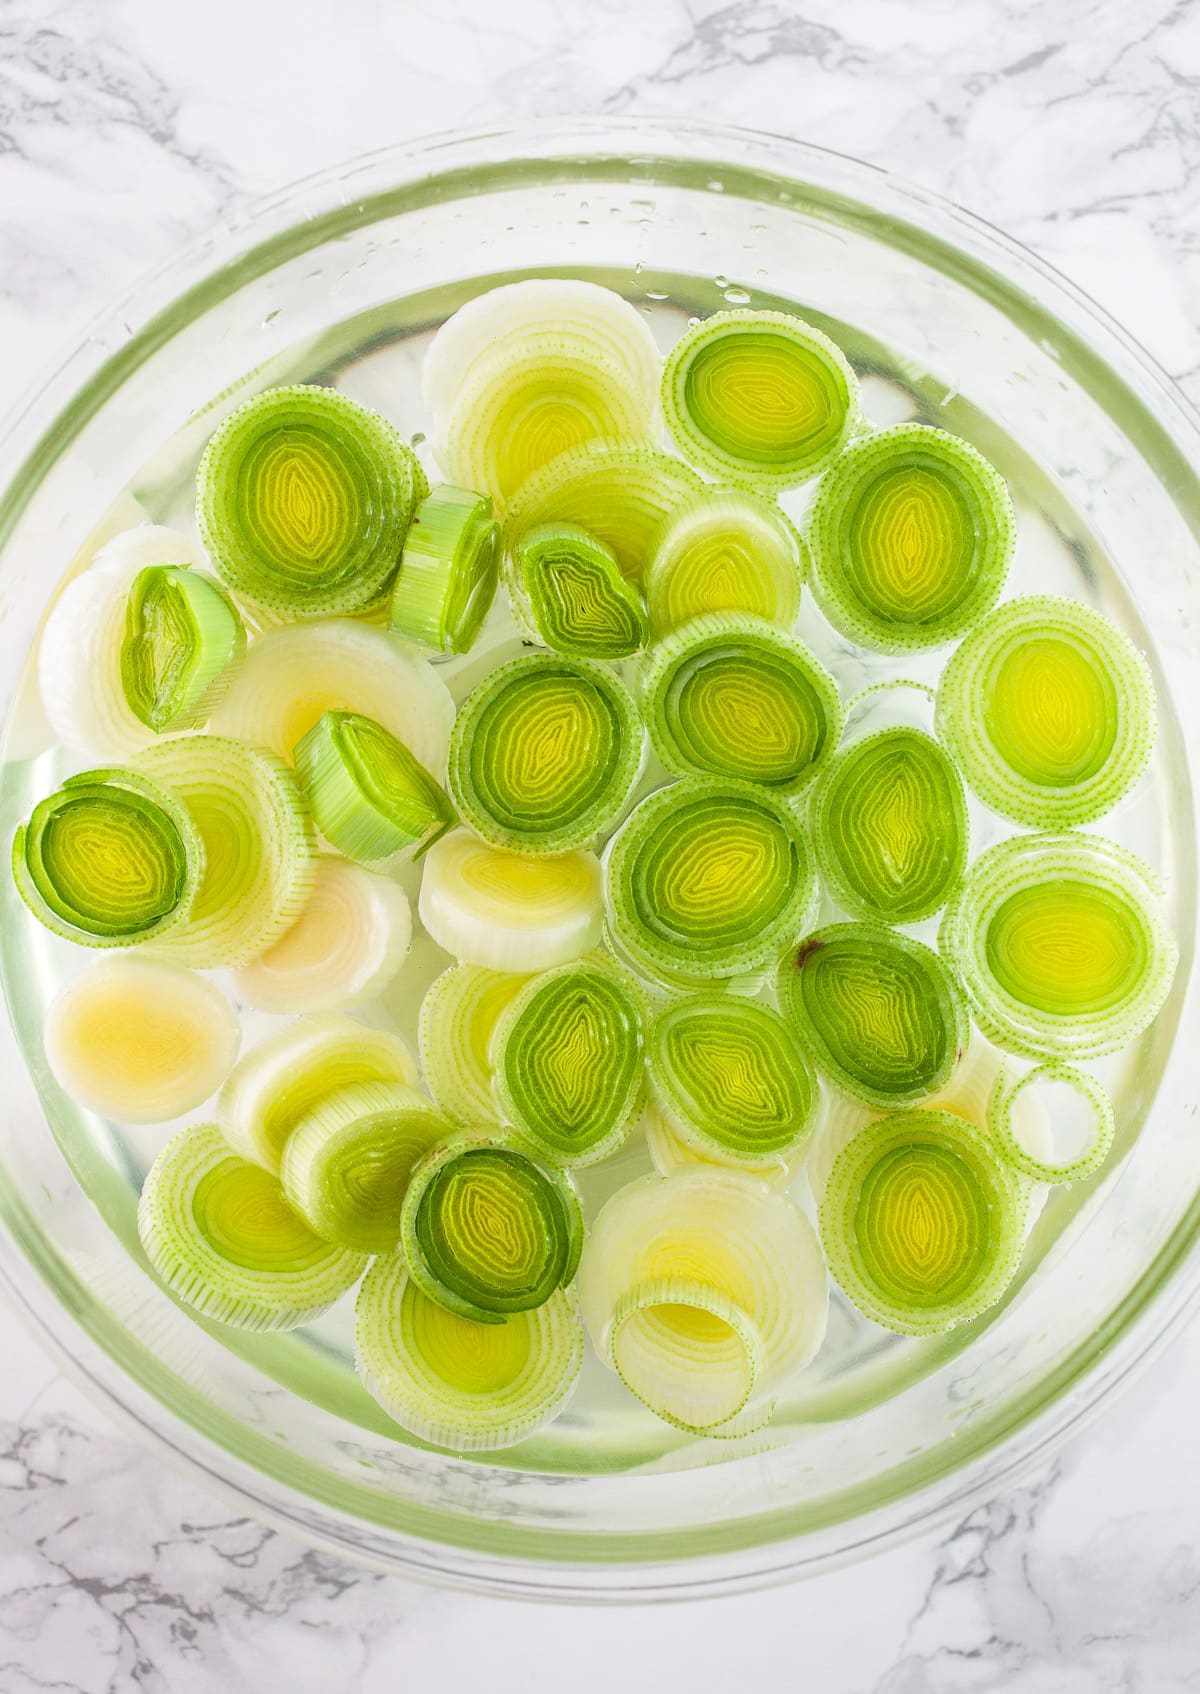 Sliced leeks in glass bowl of water.